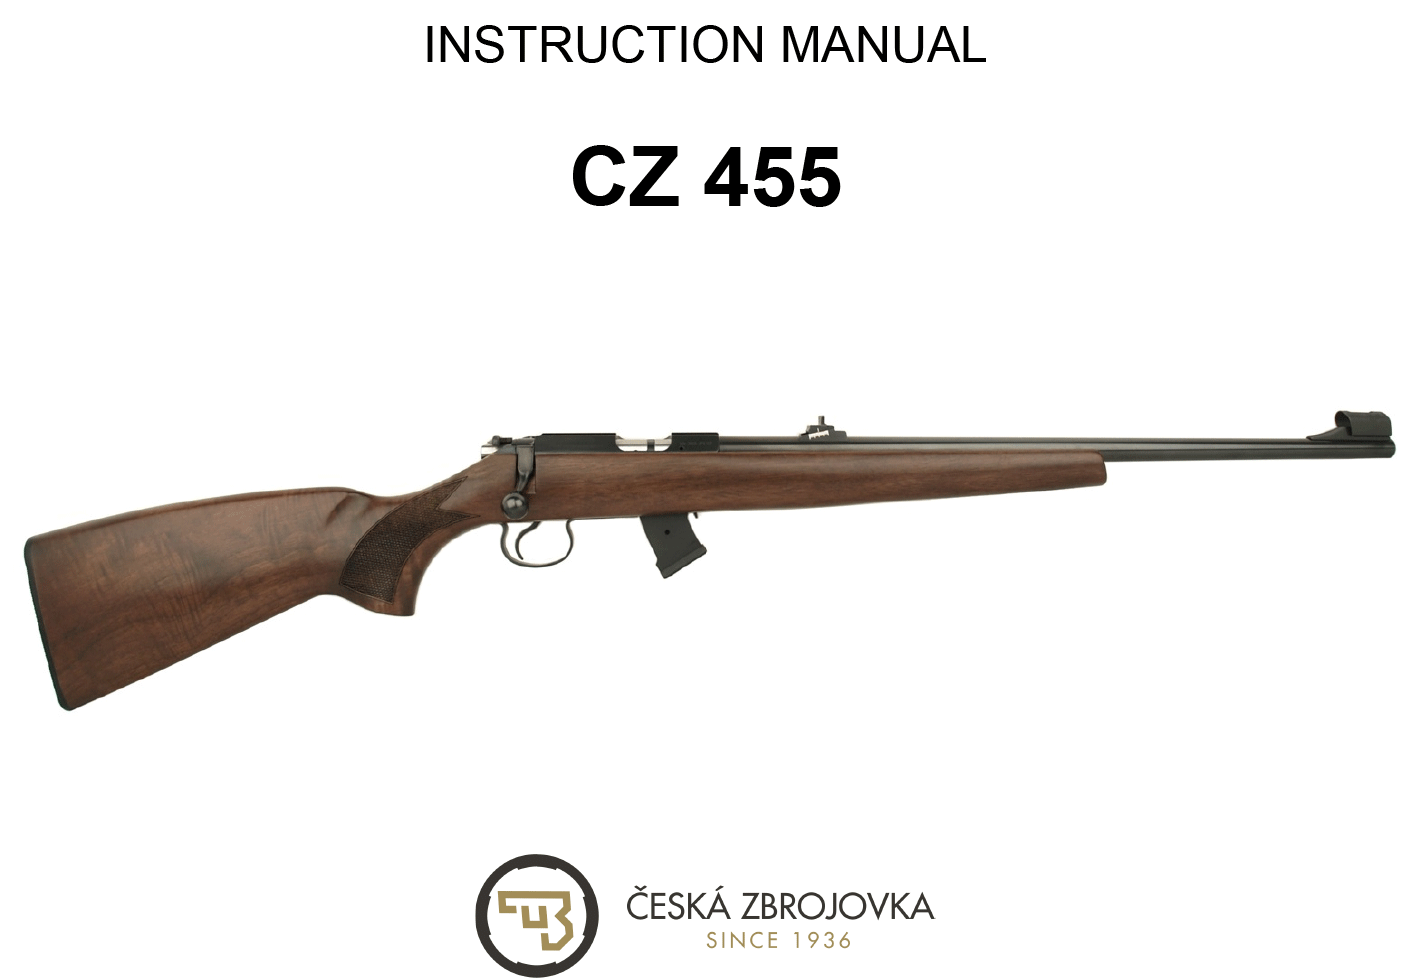 CZ 455 Owner's Manual